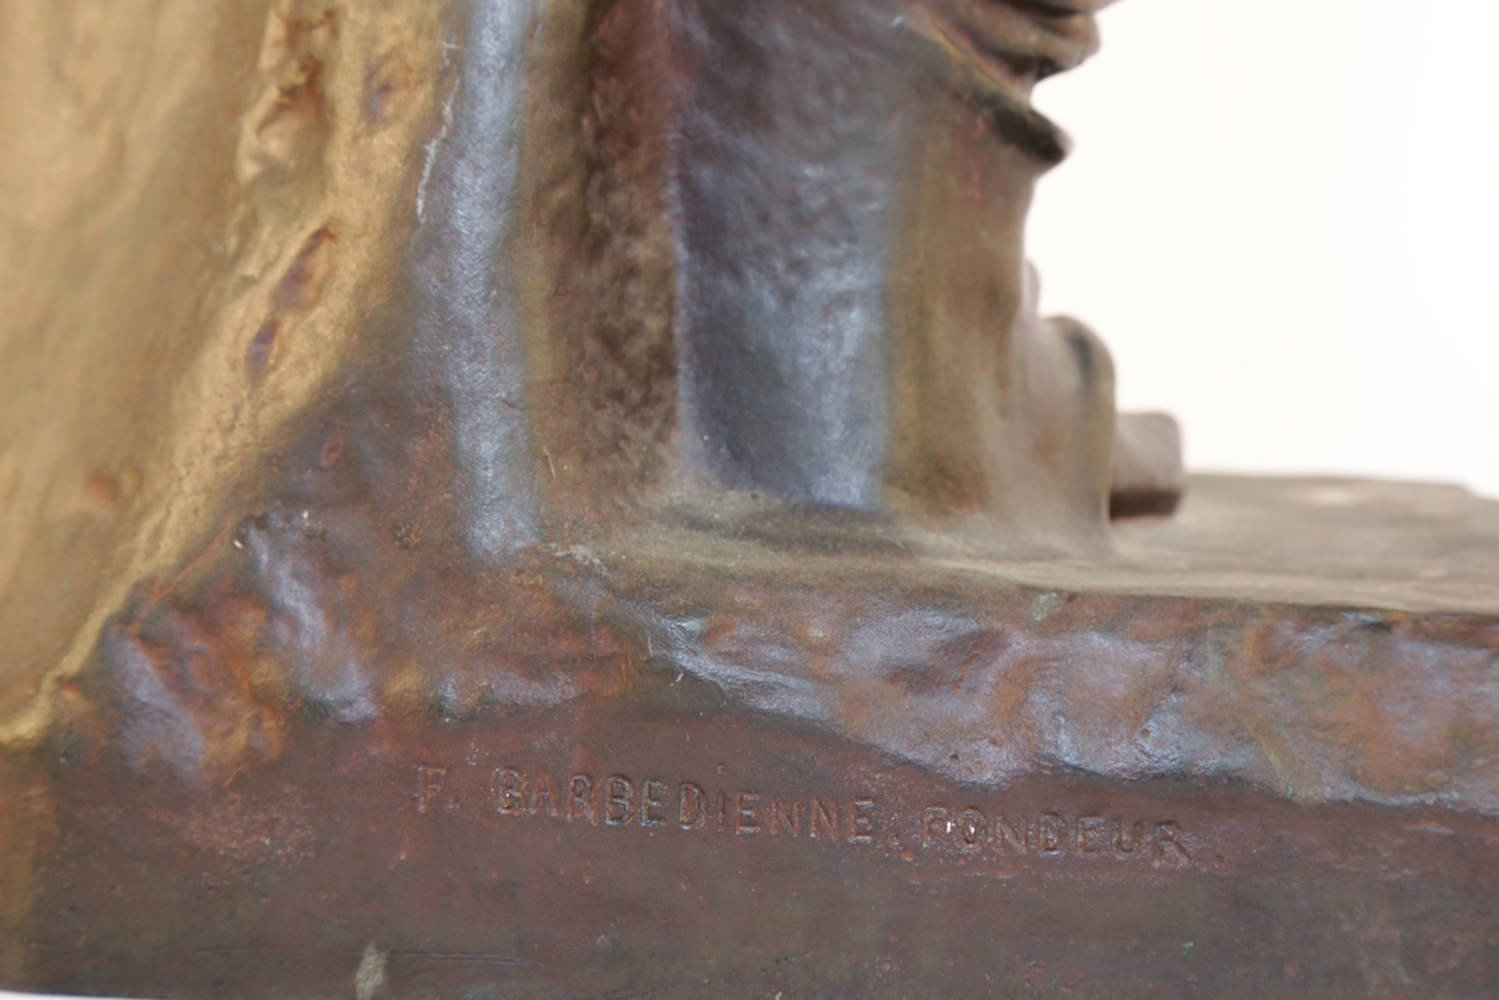 Figurative Bronze with Reddish Brown Patination Sculpture: 